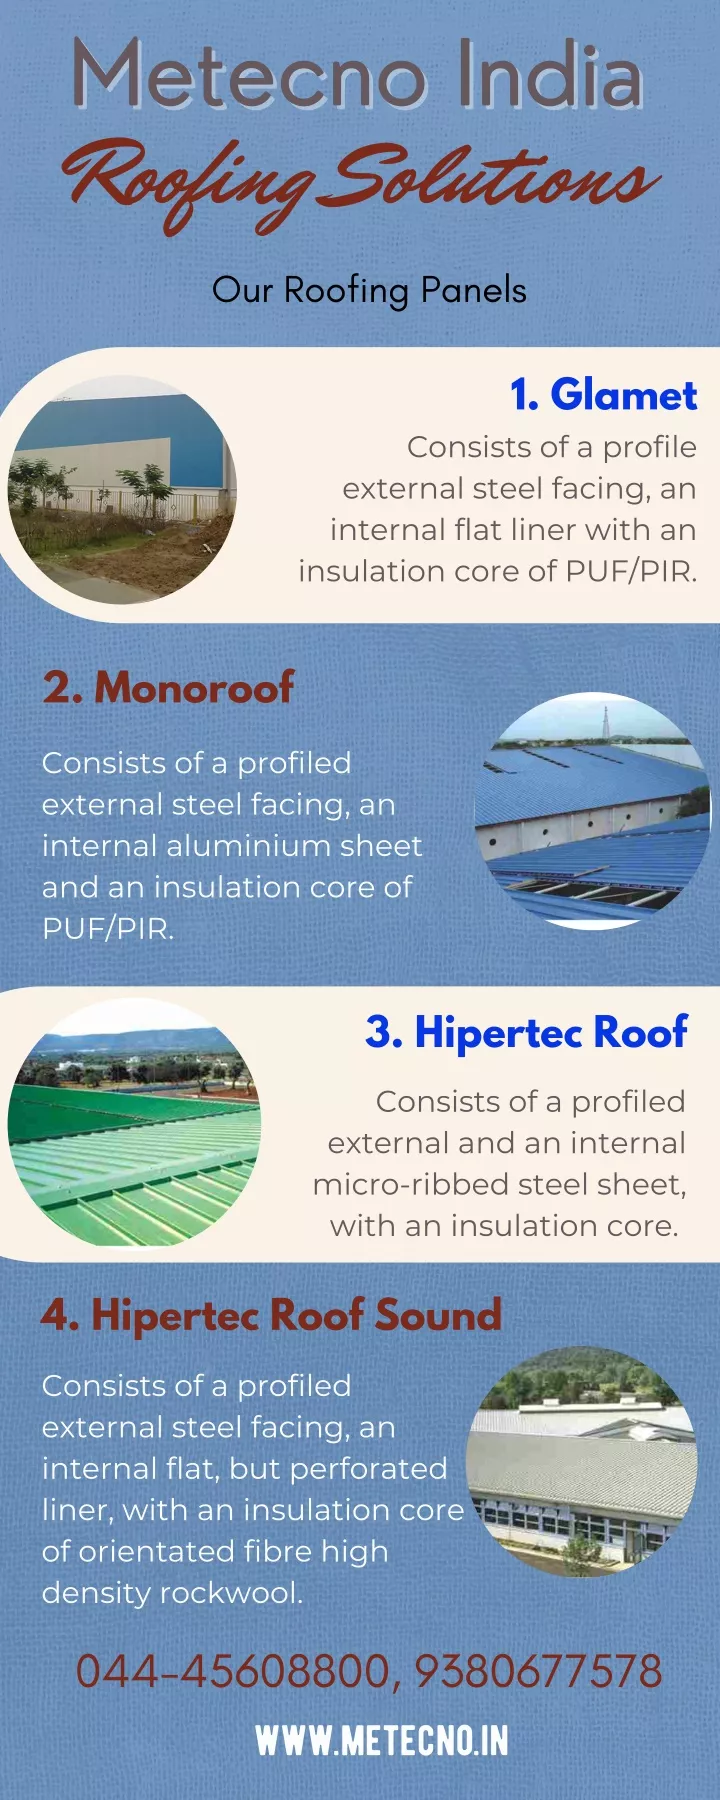 metecno india metecno india roofing solutions